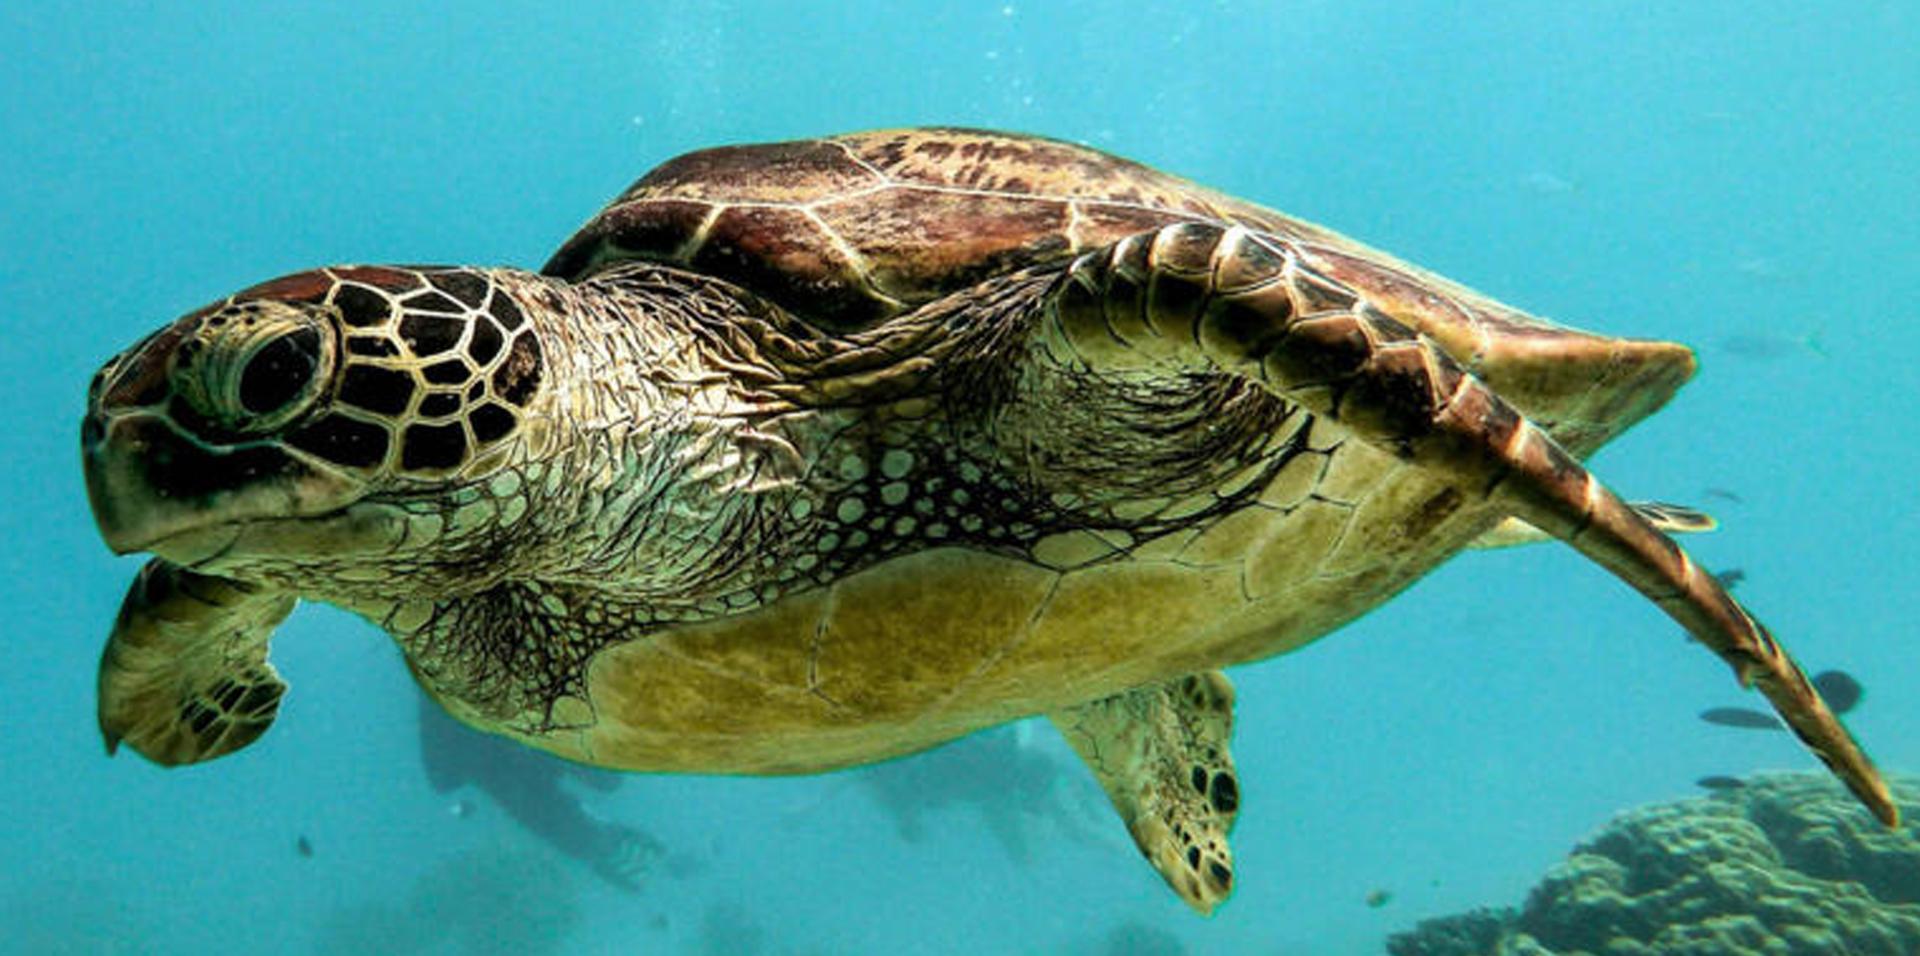 Zanzibar tortue 1 standard size copie